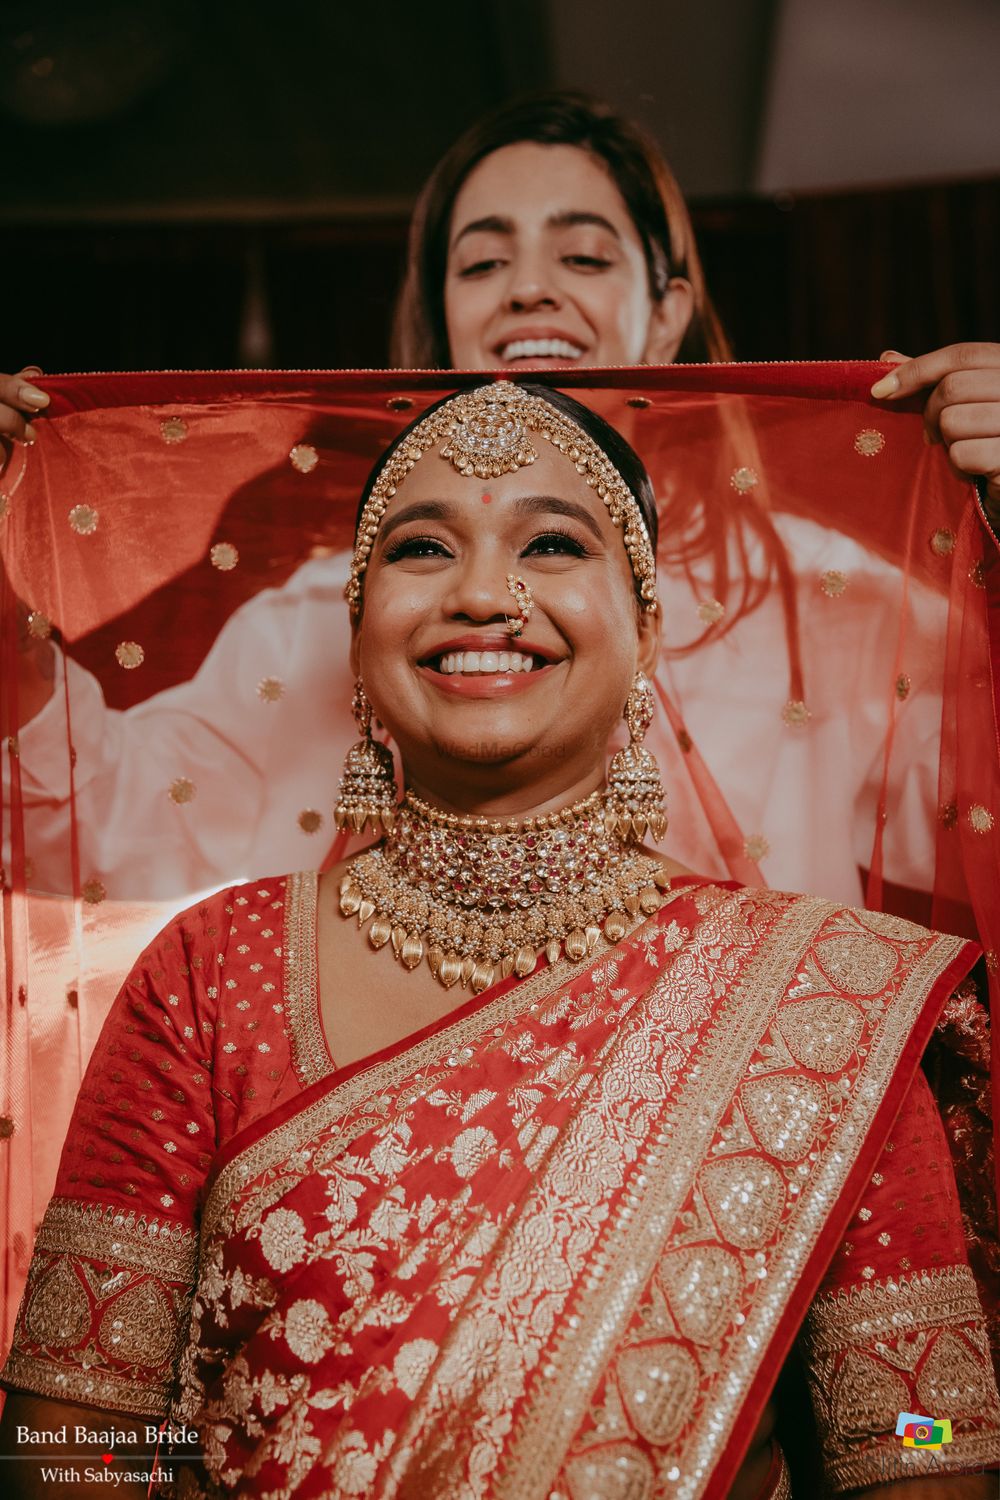 Photo From Band Baaja Bride - Rajashree - By Nitin Arora Photography